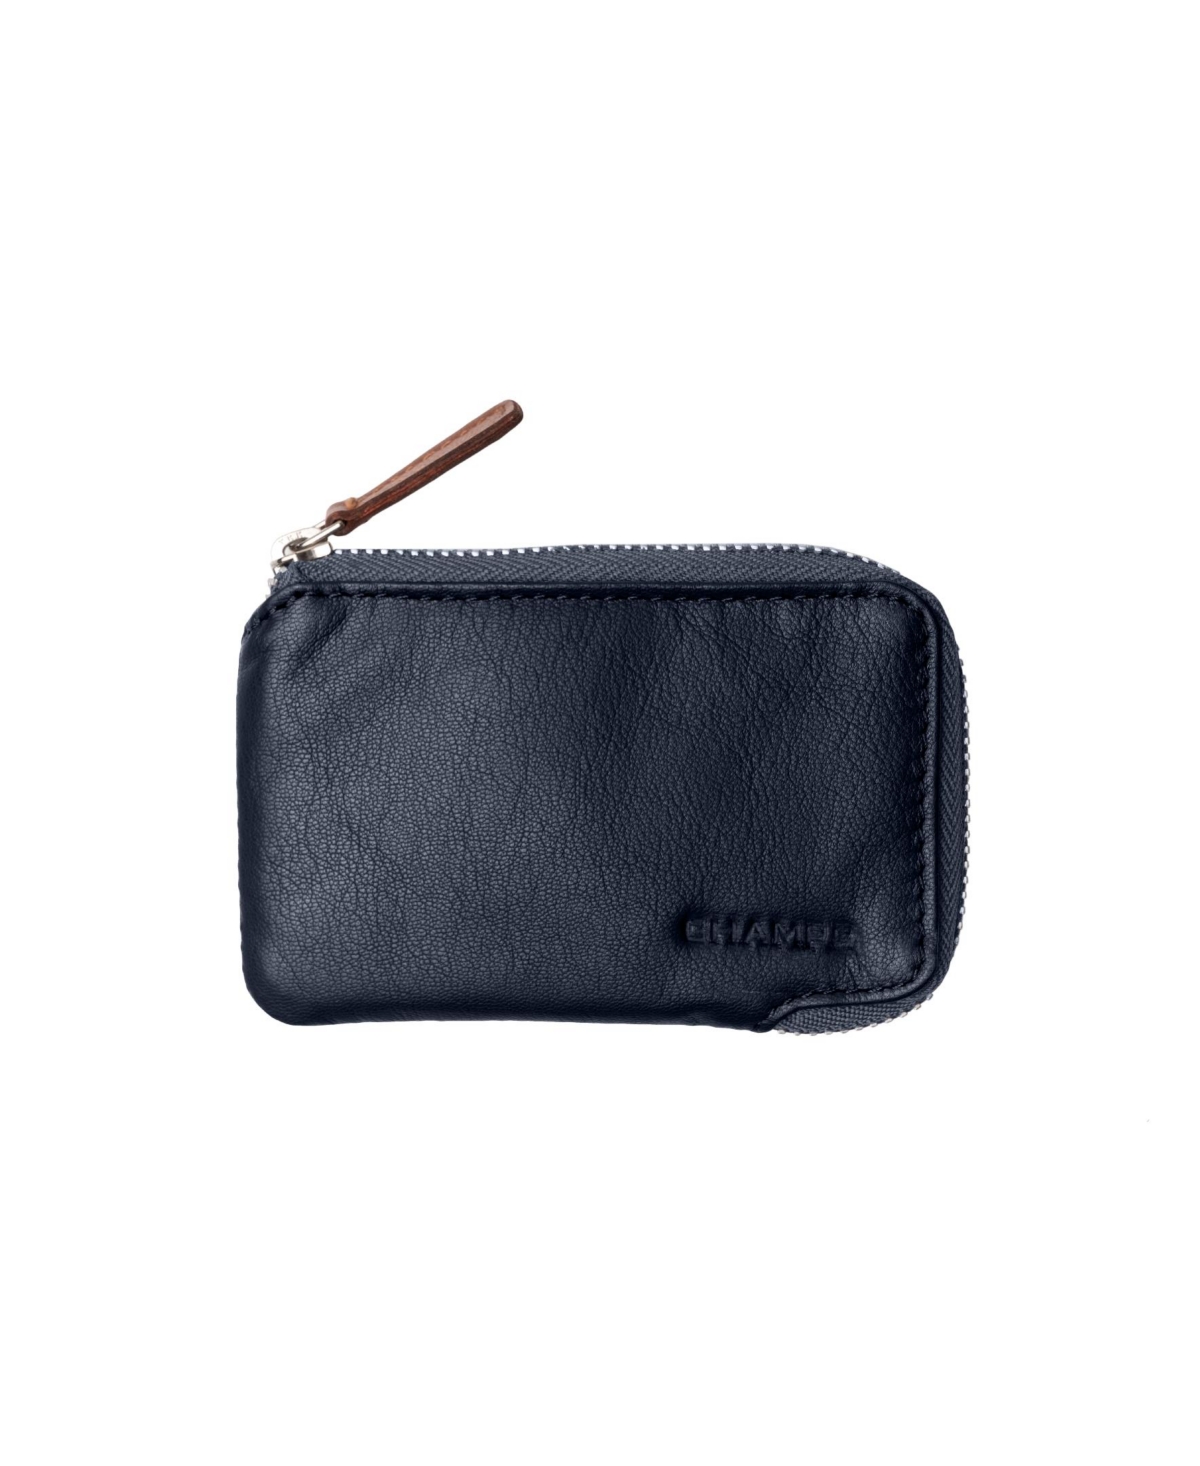 Men's Zip Case Leather Rfid Card Holder in Gift Box - Khaki